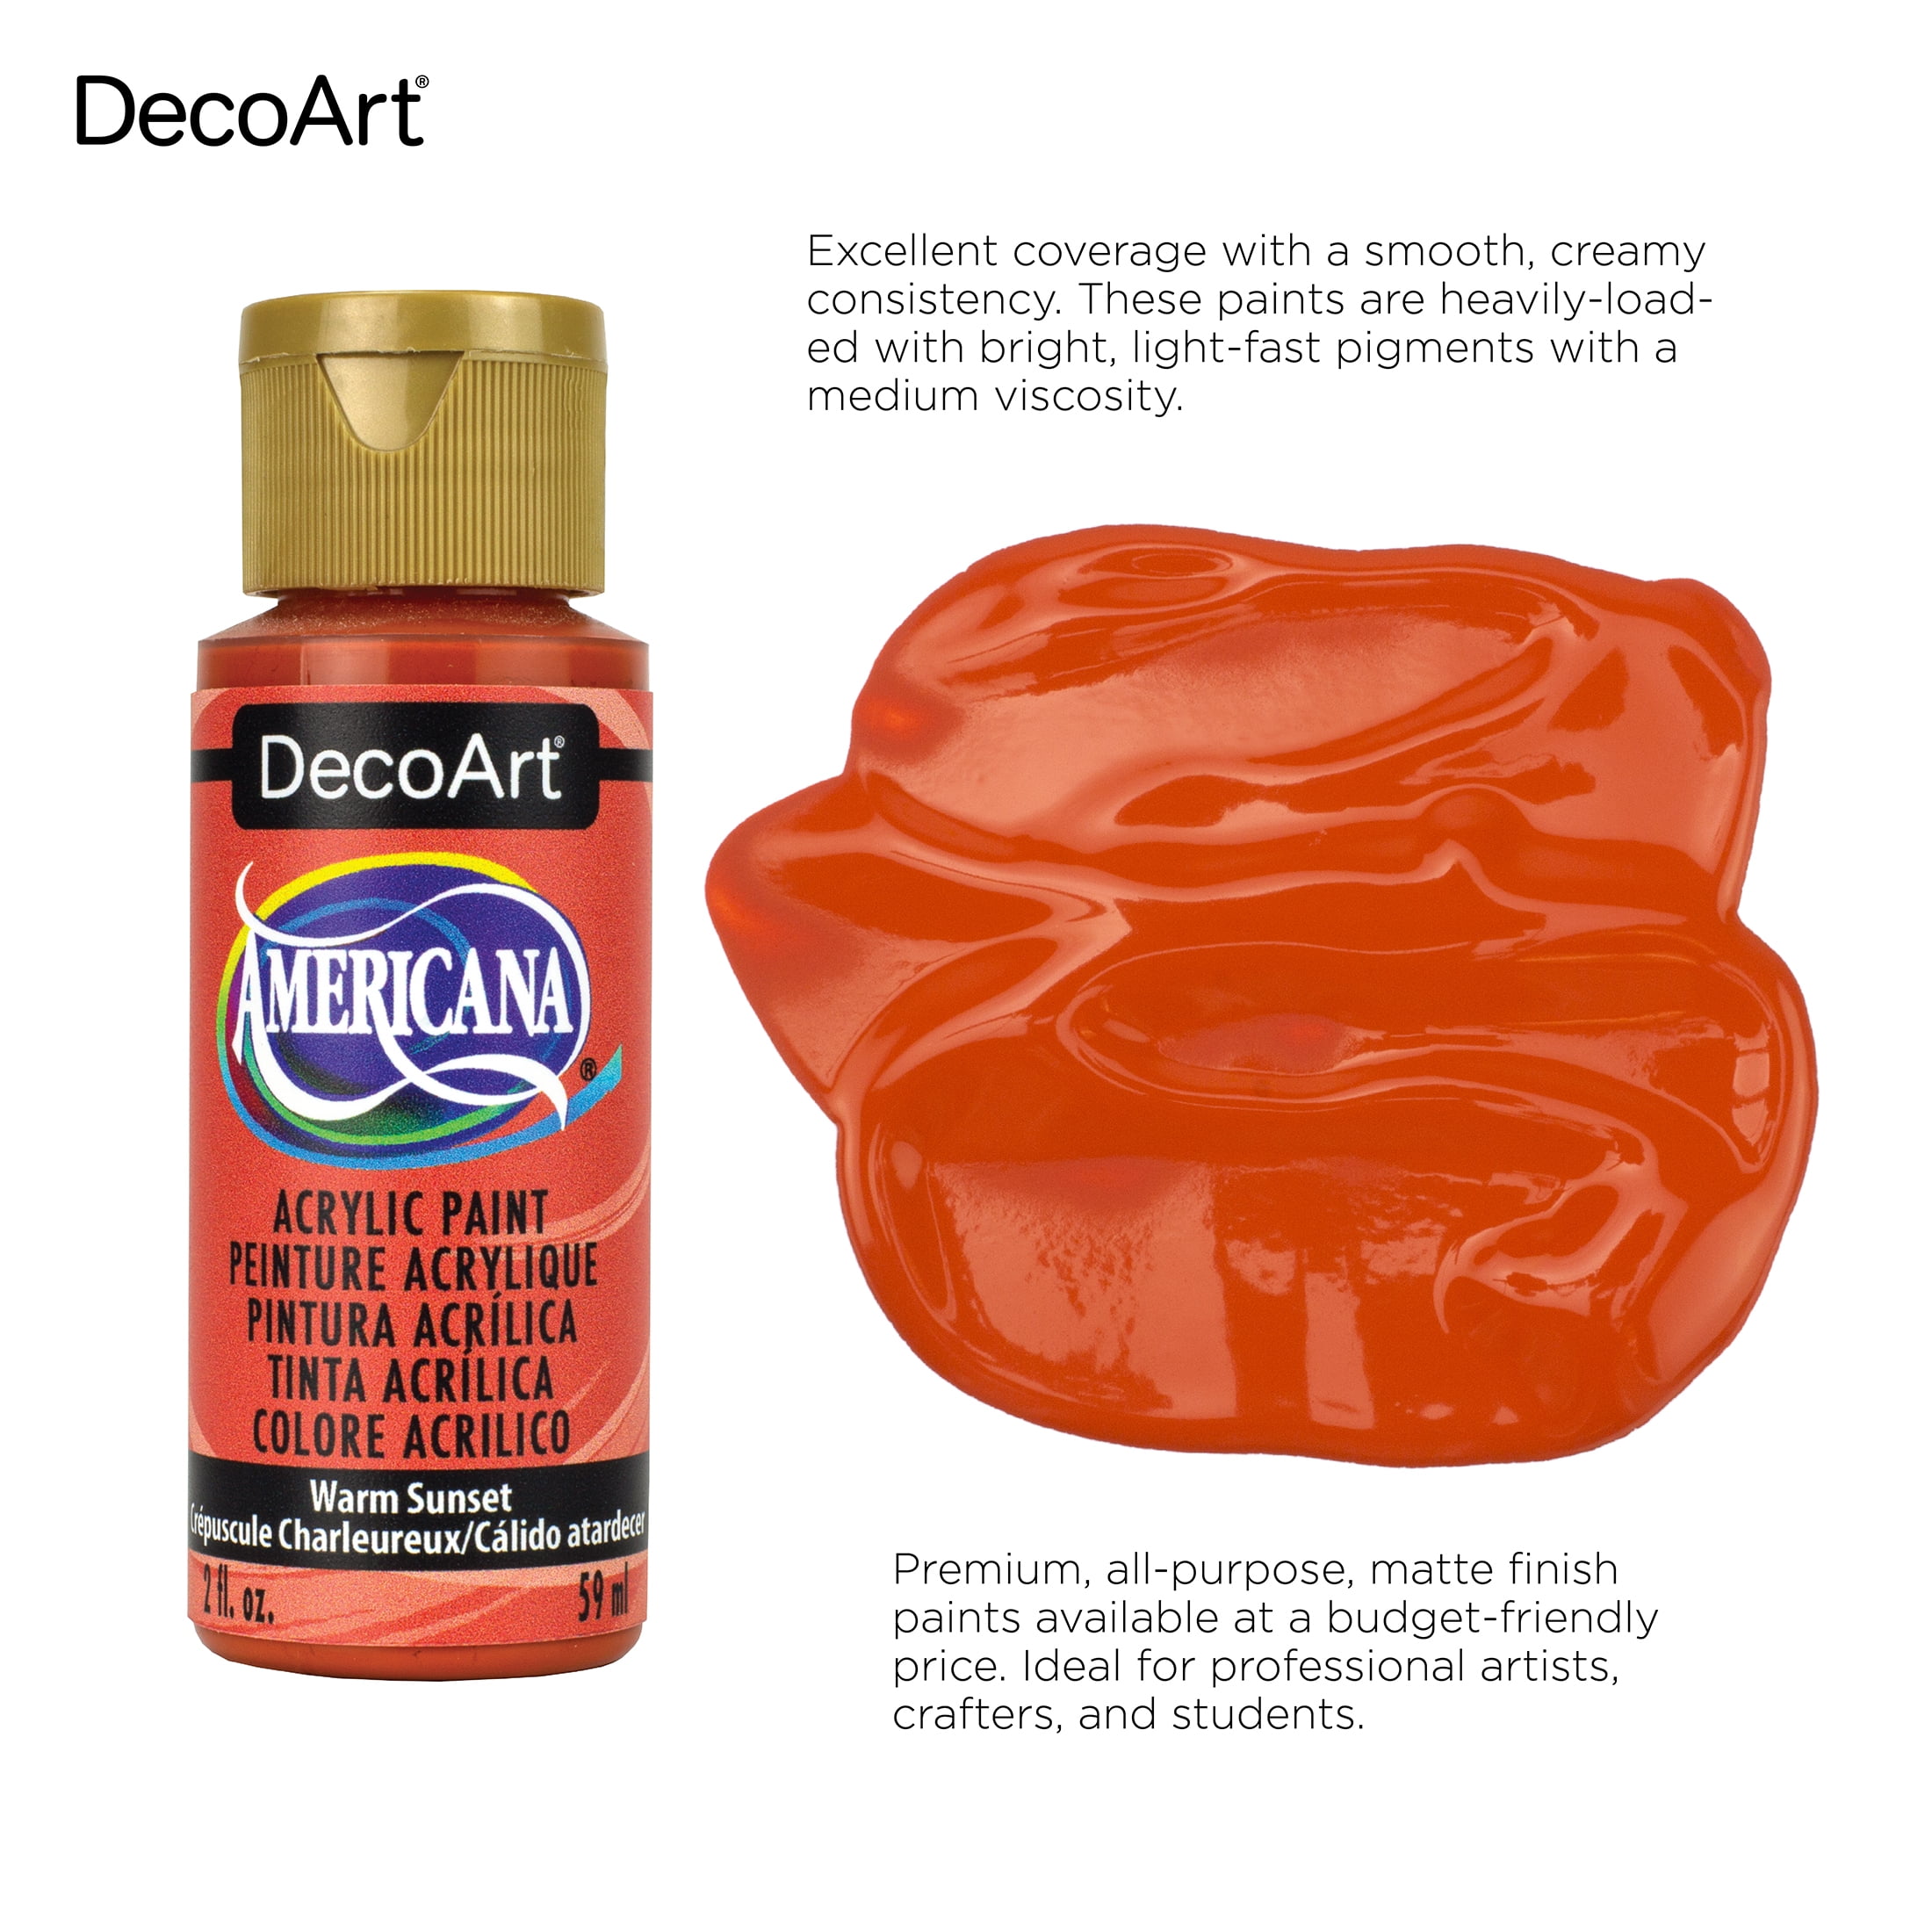 DecoArt Americana Acrylic Paint 2oz-Cool White - Semi-Opaque, 1 count -  Kroger